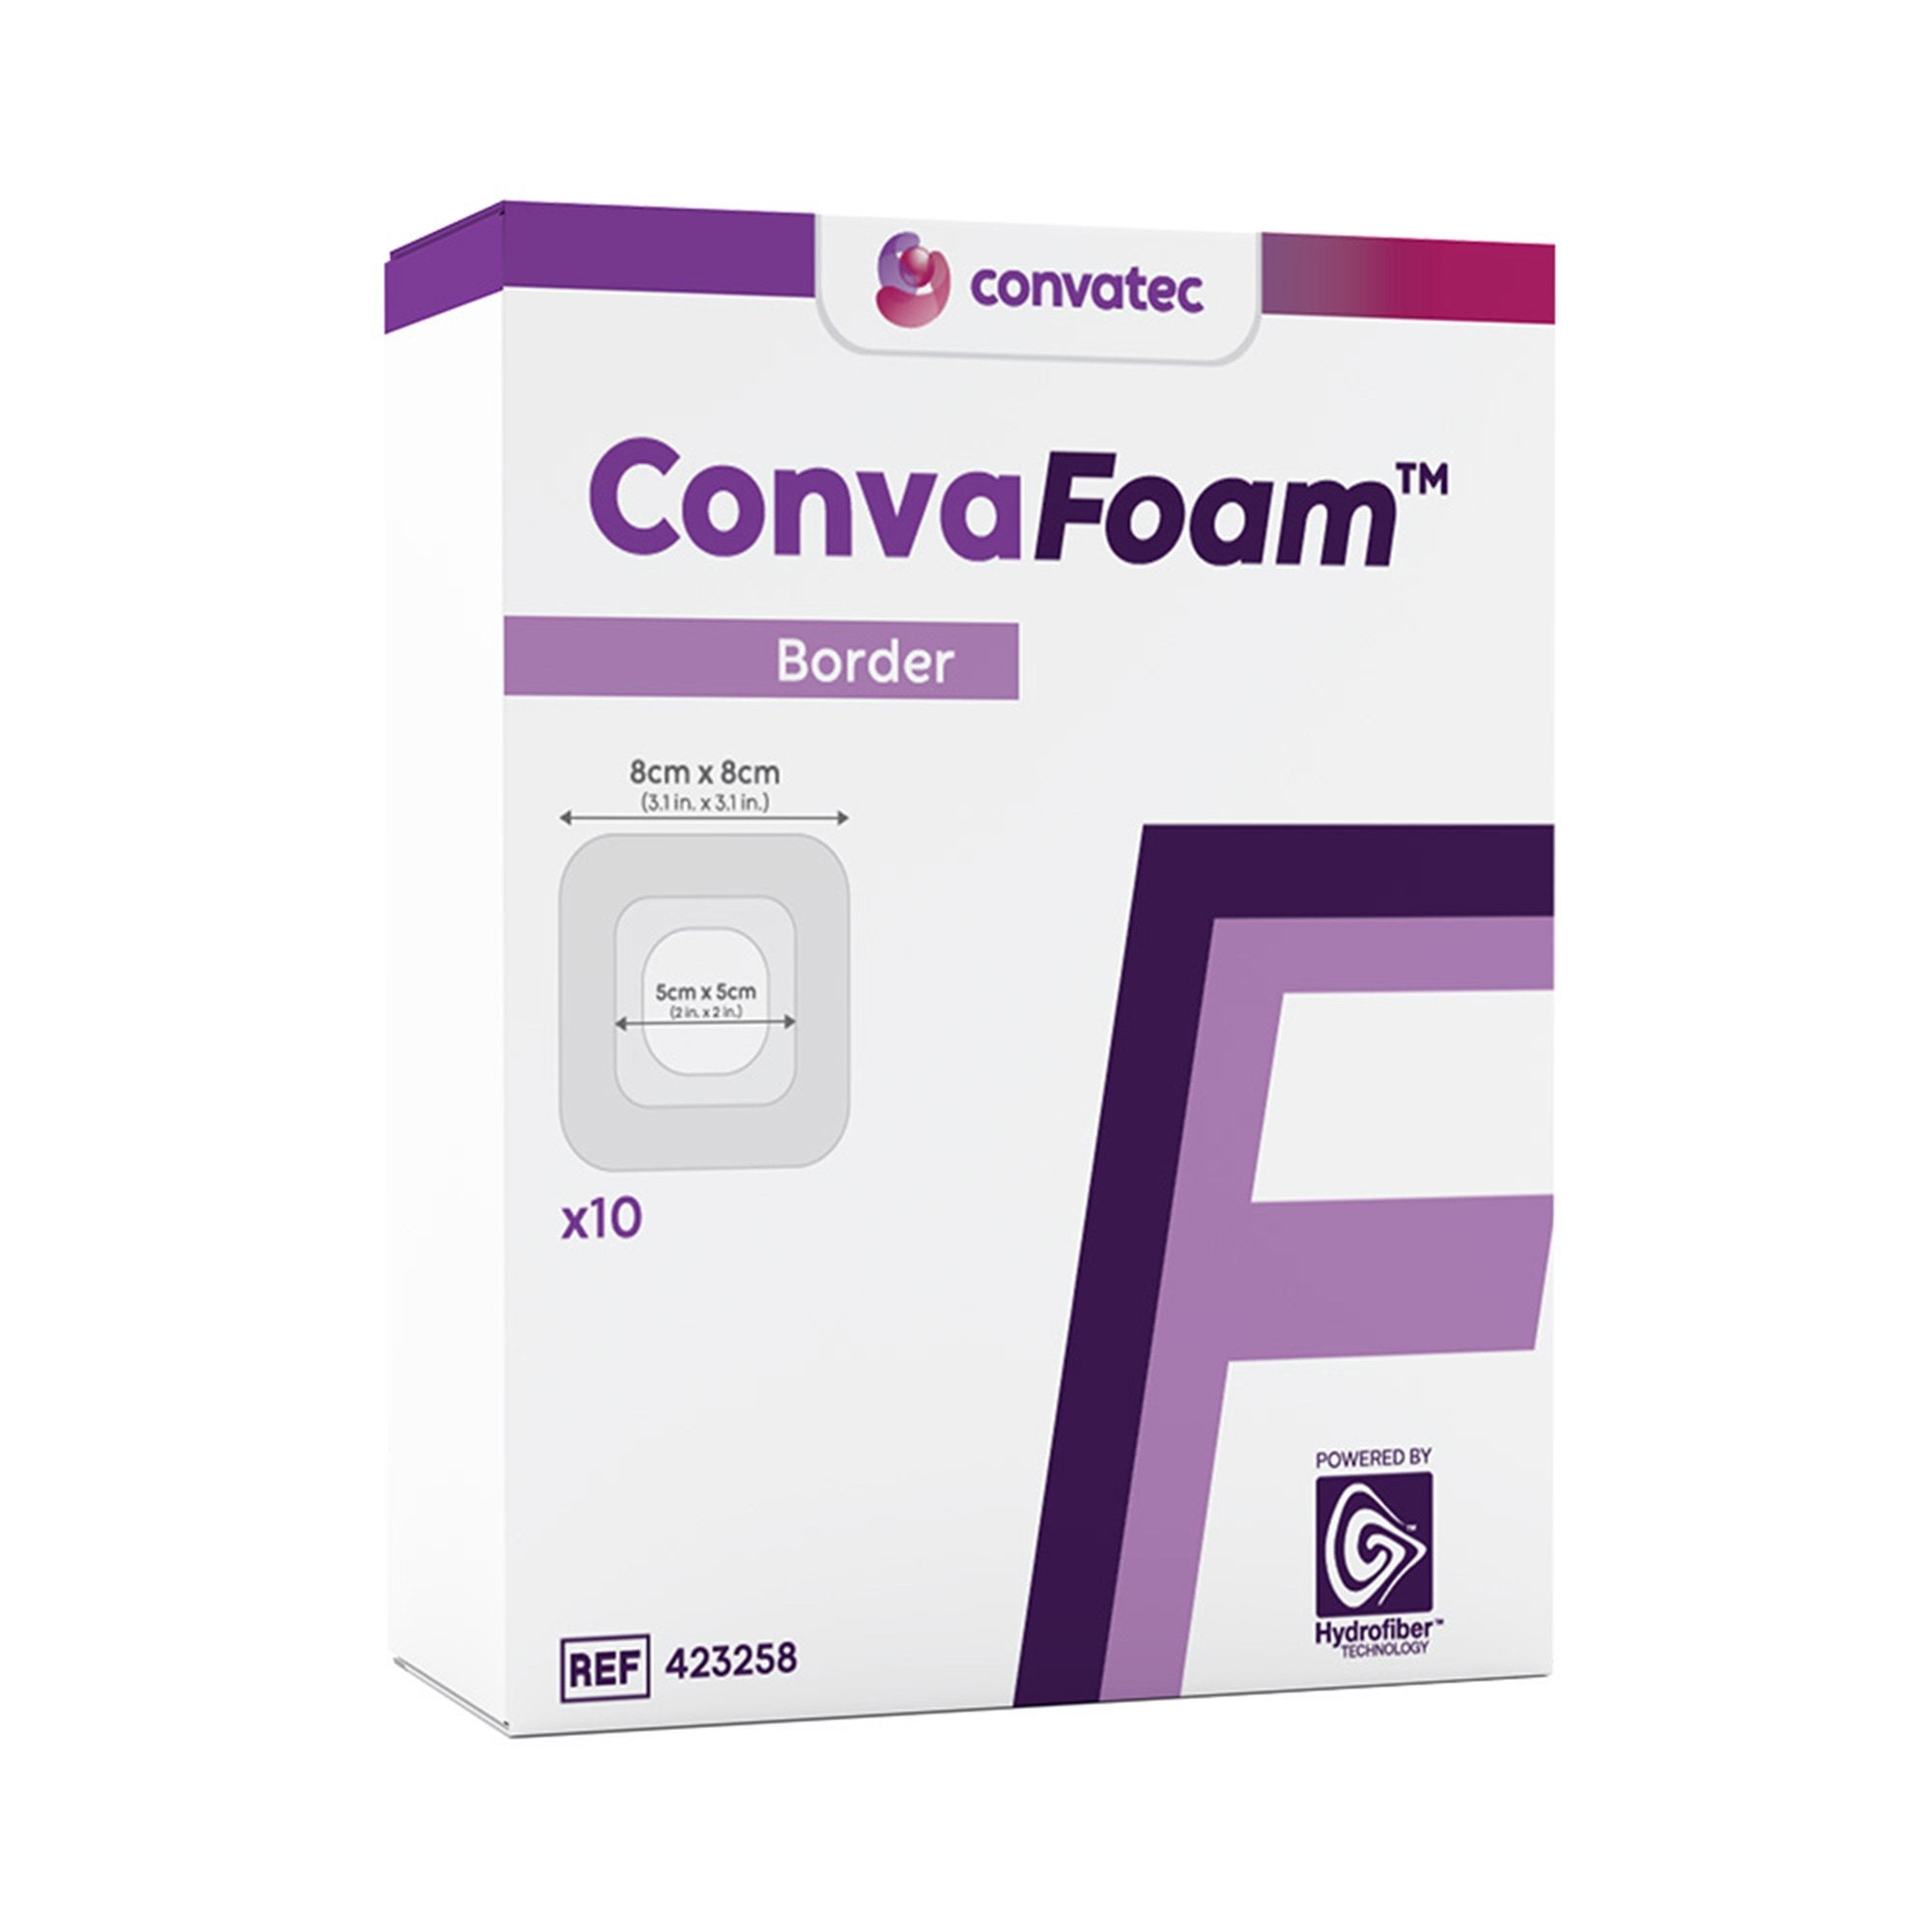 Foam Dressing ConvaFoam™ Border 3 X 3 Inch With Border Film Backing Silicone Adhesive Square Sterile